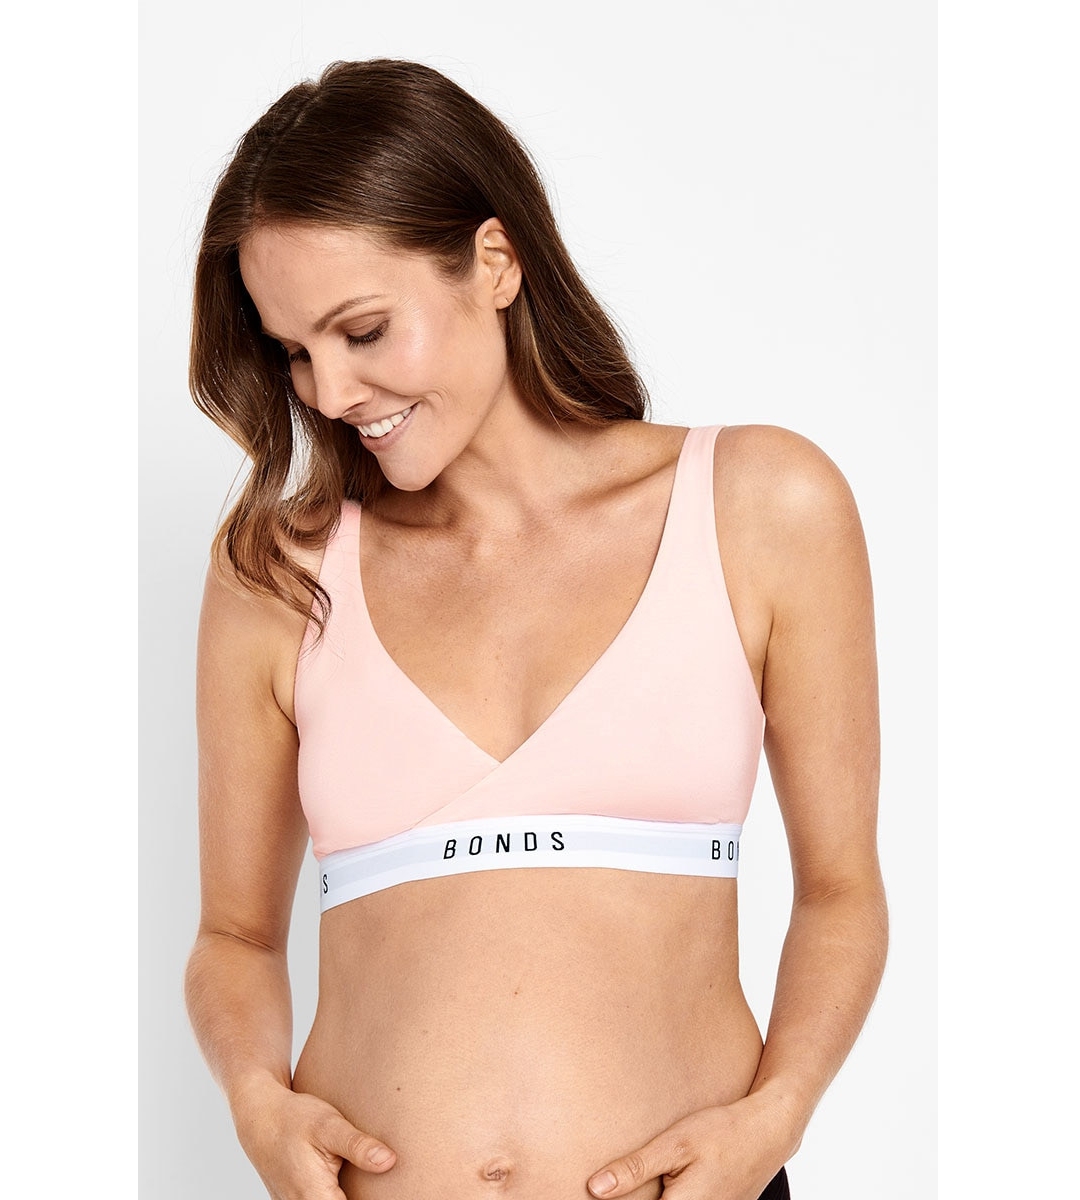 Bonds Women's Underwear Maternity Wirefree Contour Bra 